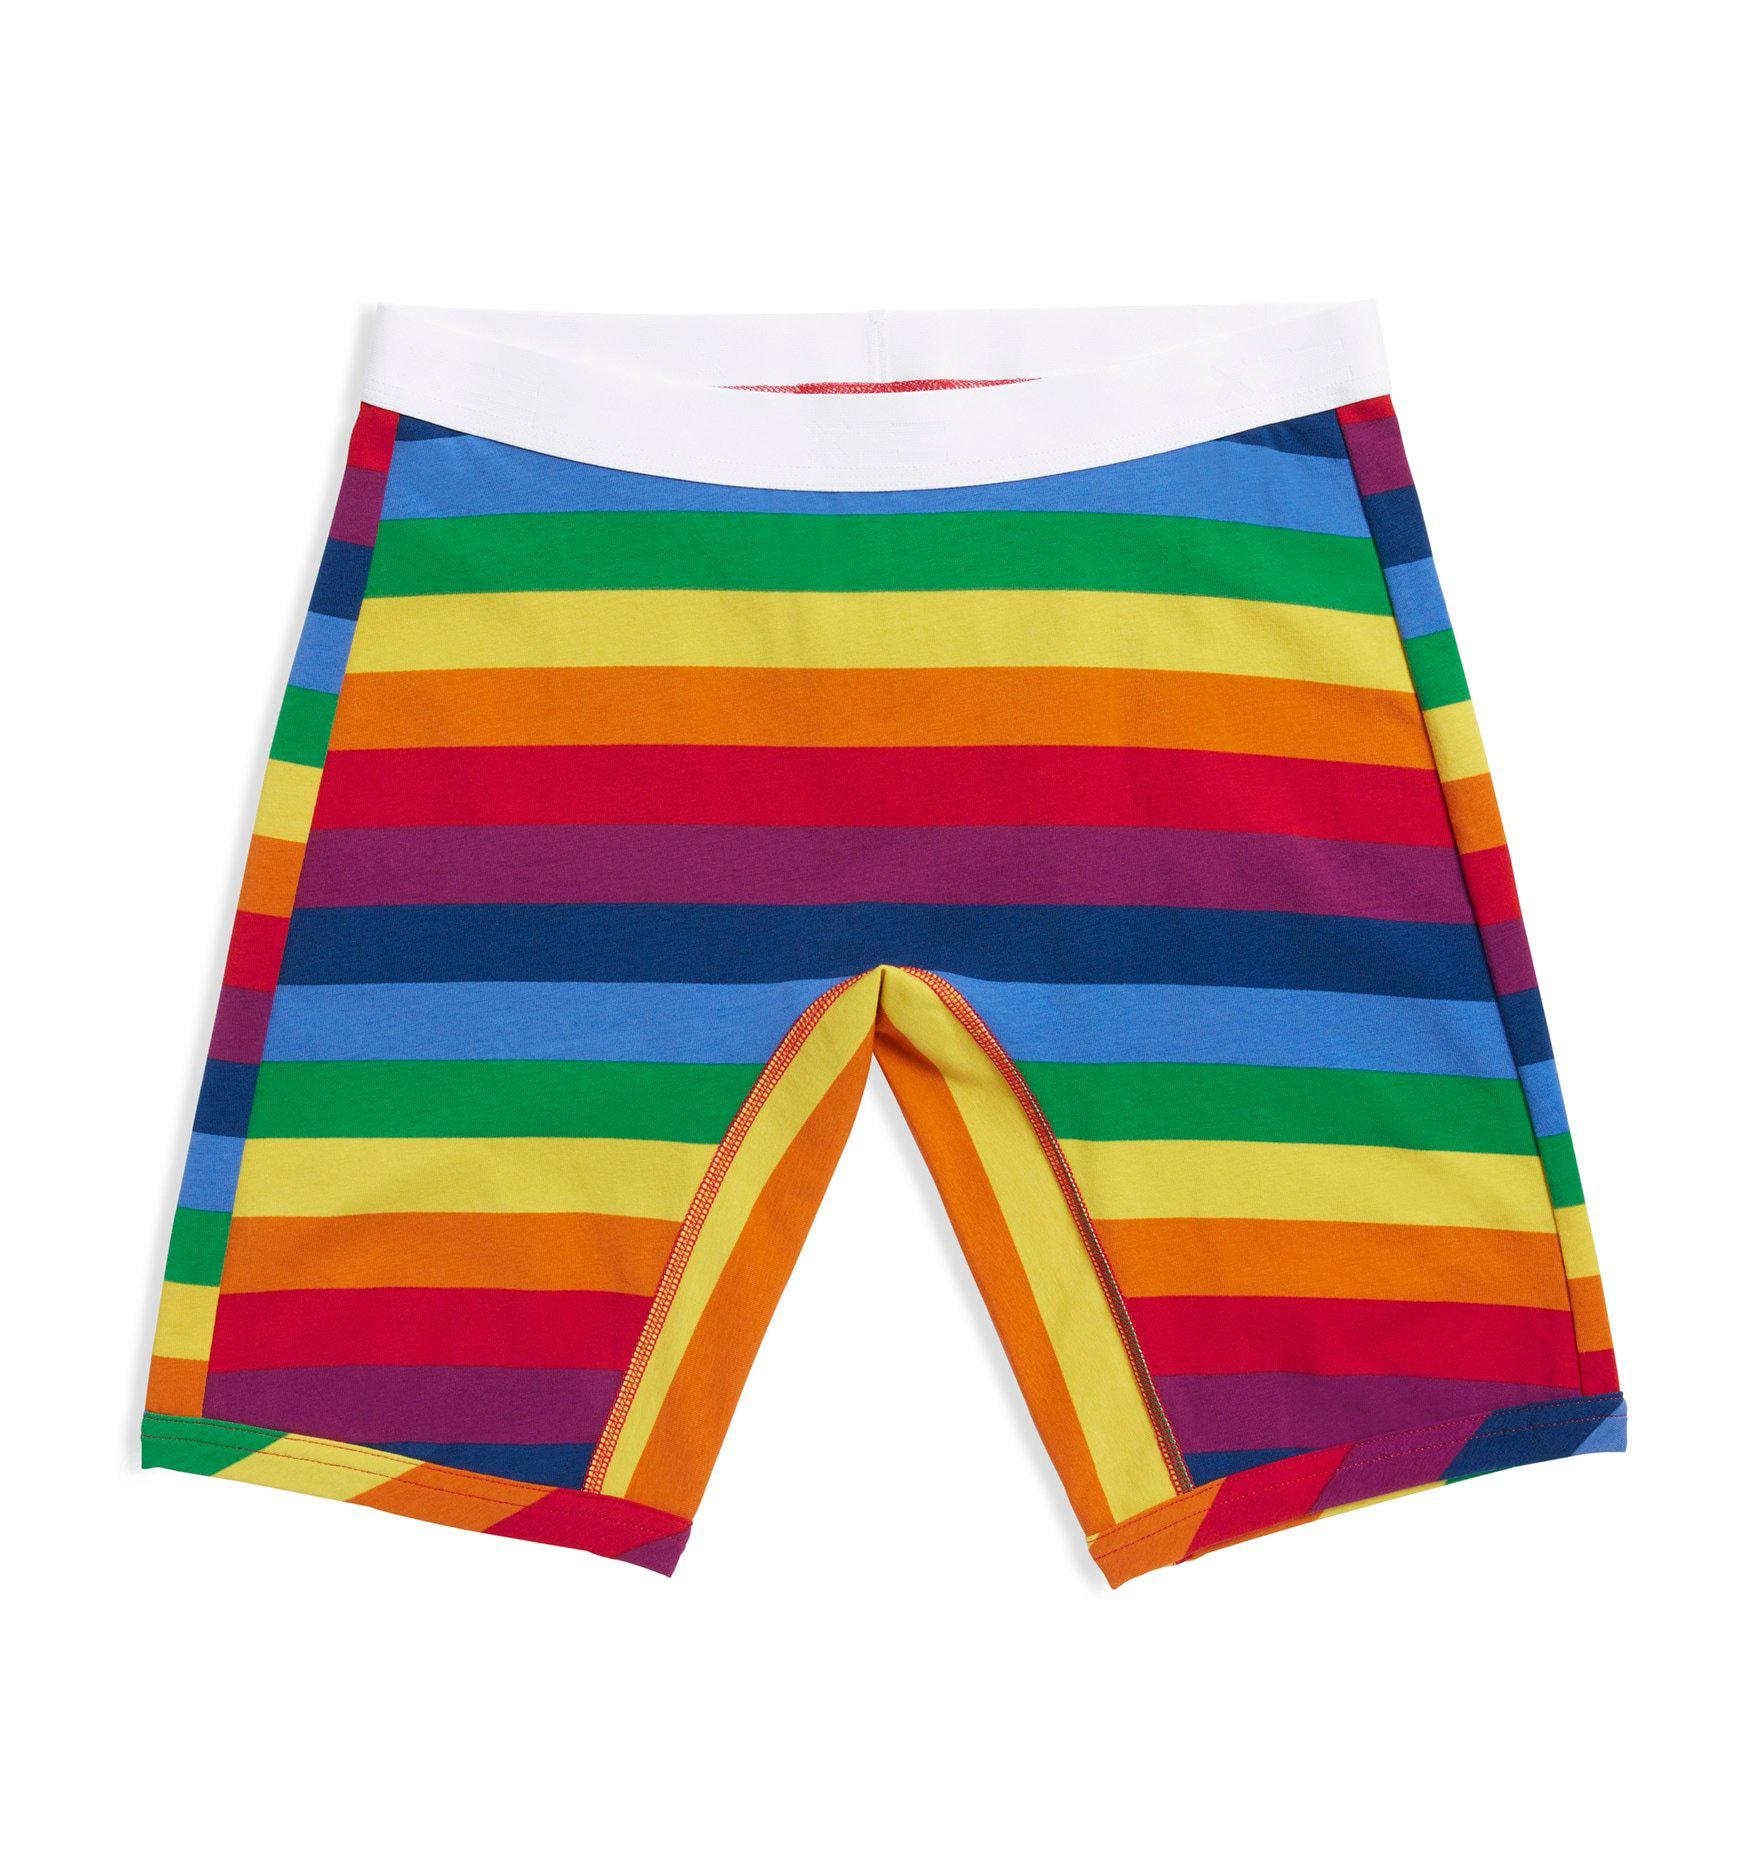 9 Boxer Briefs - Rainbow Pride Stripes